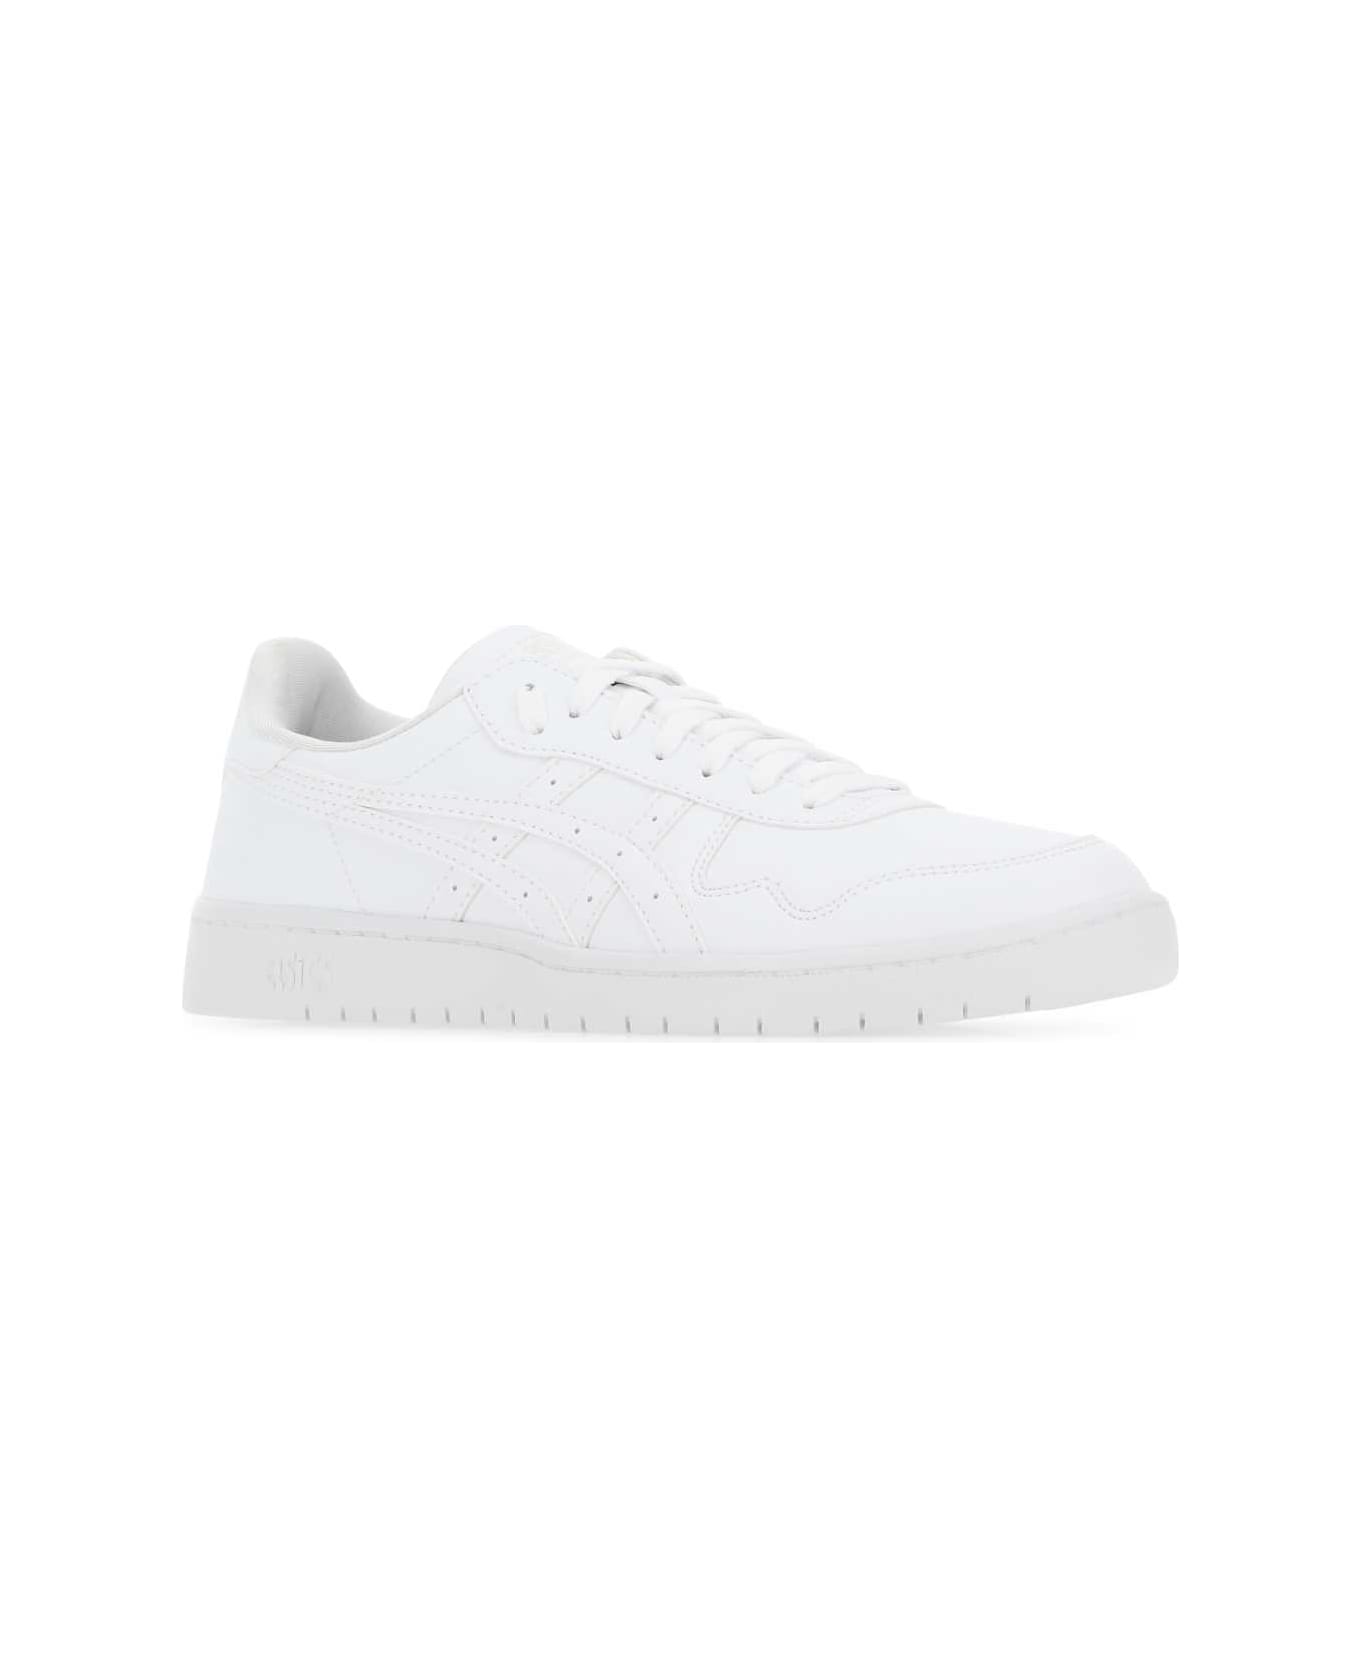 Comme des Garçons Shirt White Leather Japan Sneakers - WHITE スニーカー